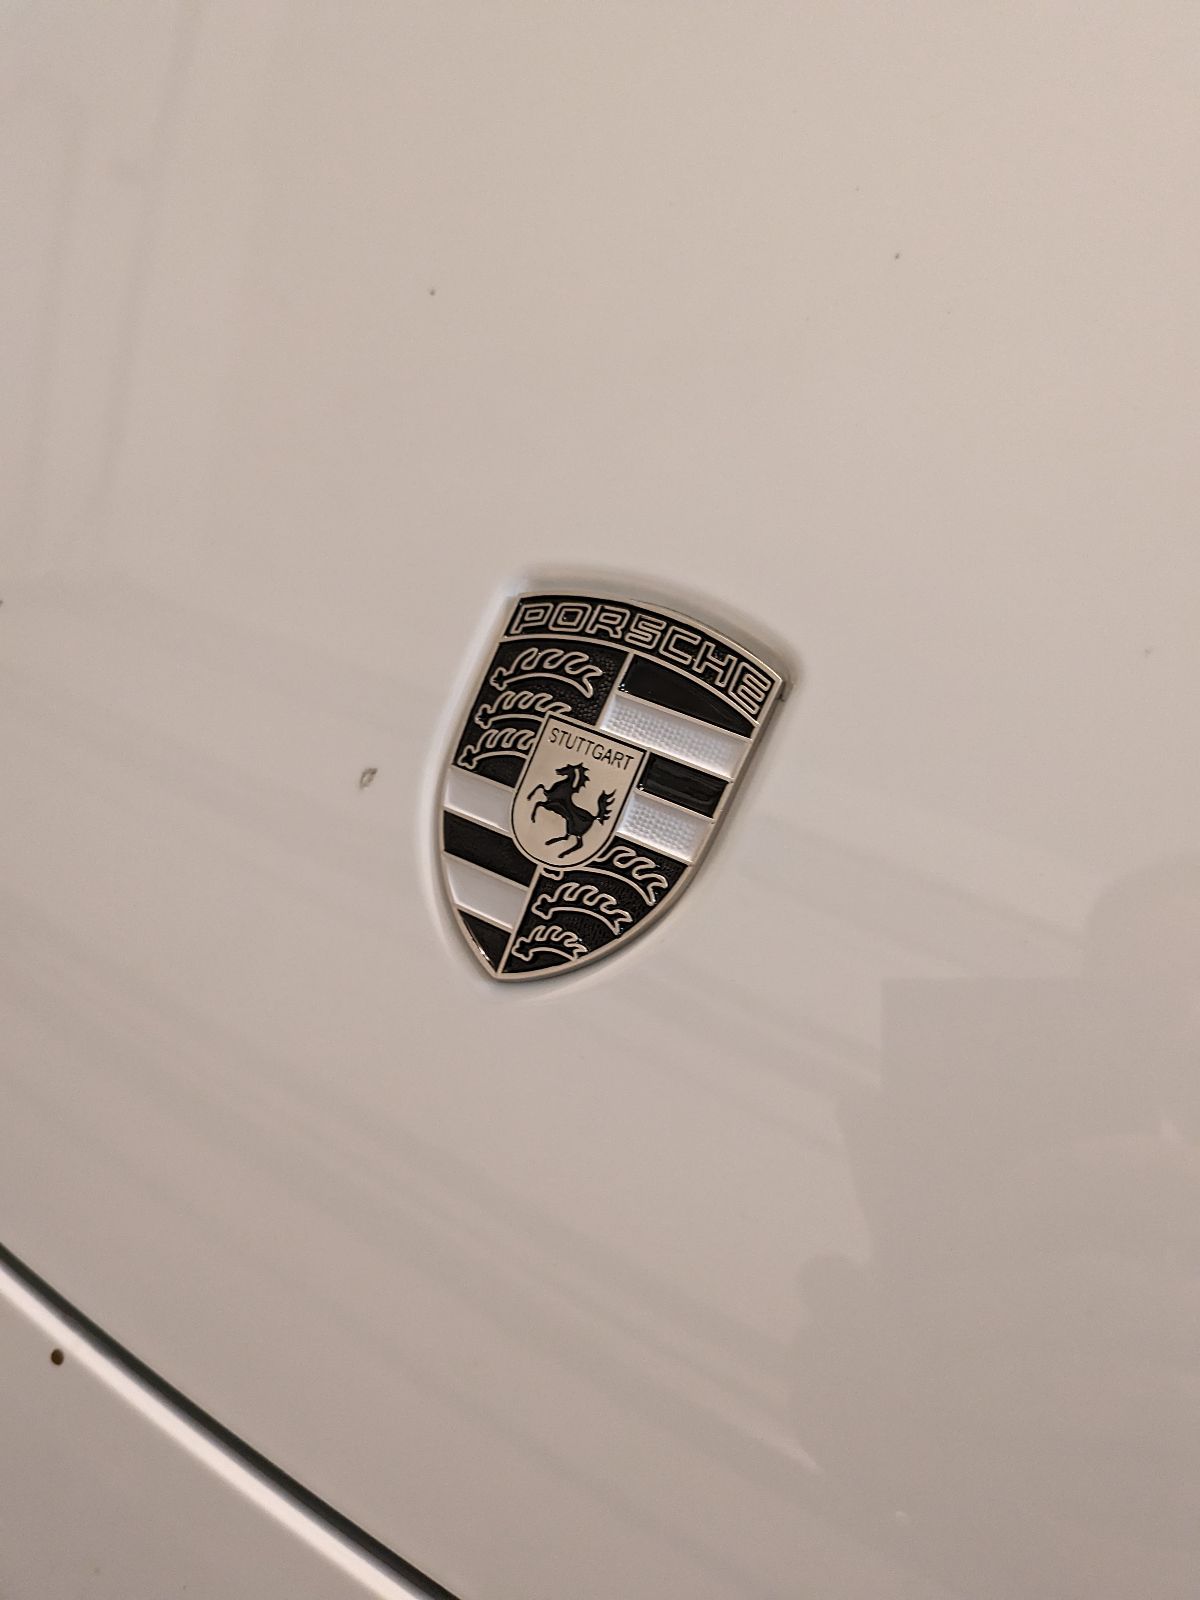 Porsche Taycan Need monochrome replacement hood emblem PXL_20230815_204841823